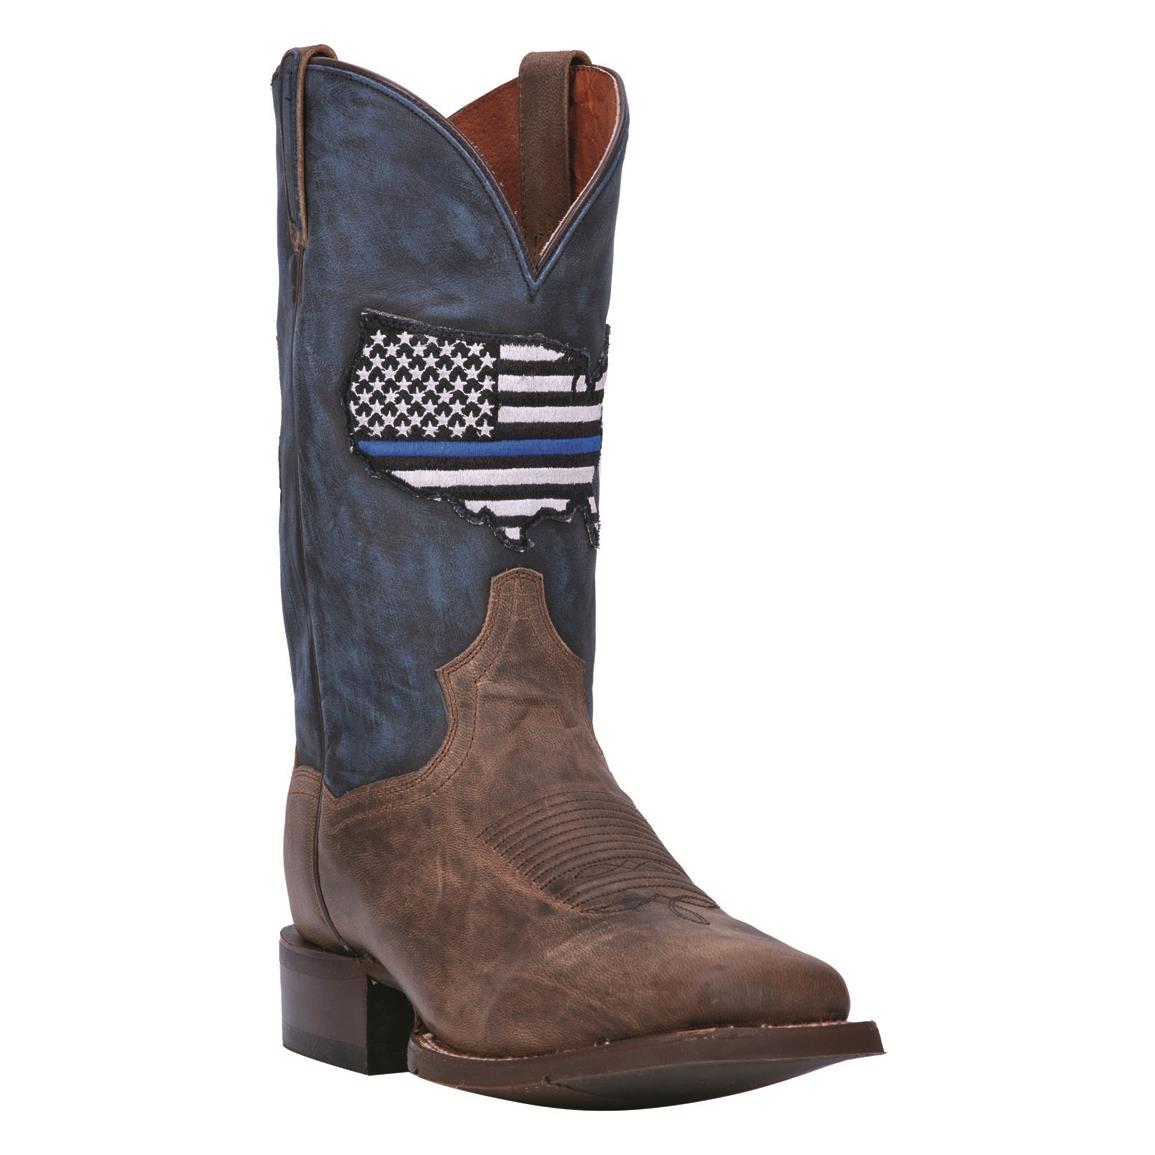 Dan Post Men's Thin Blue Line Leather Western Boots, Sand/blue